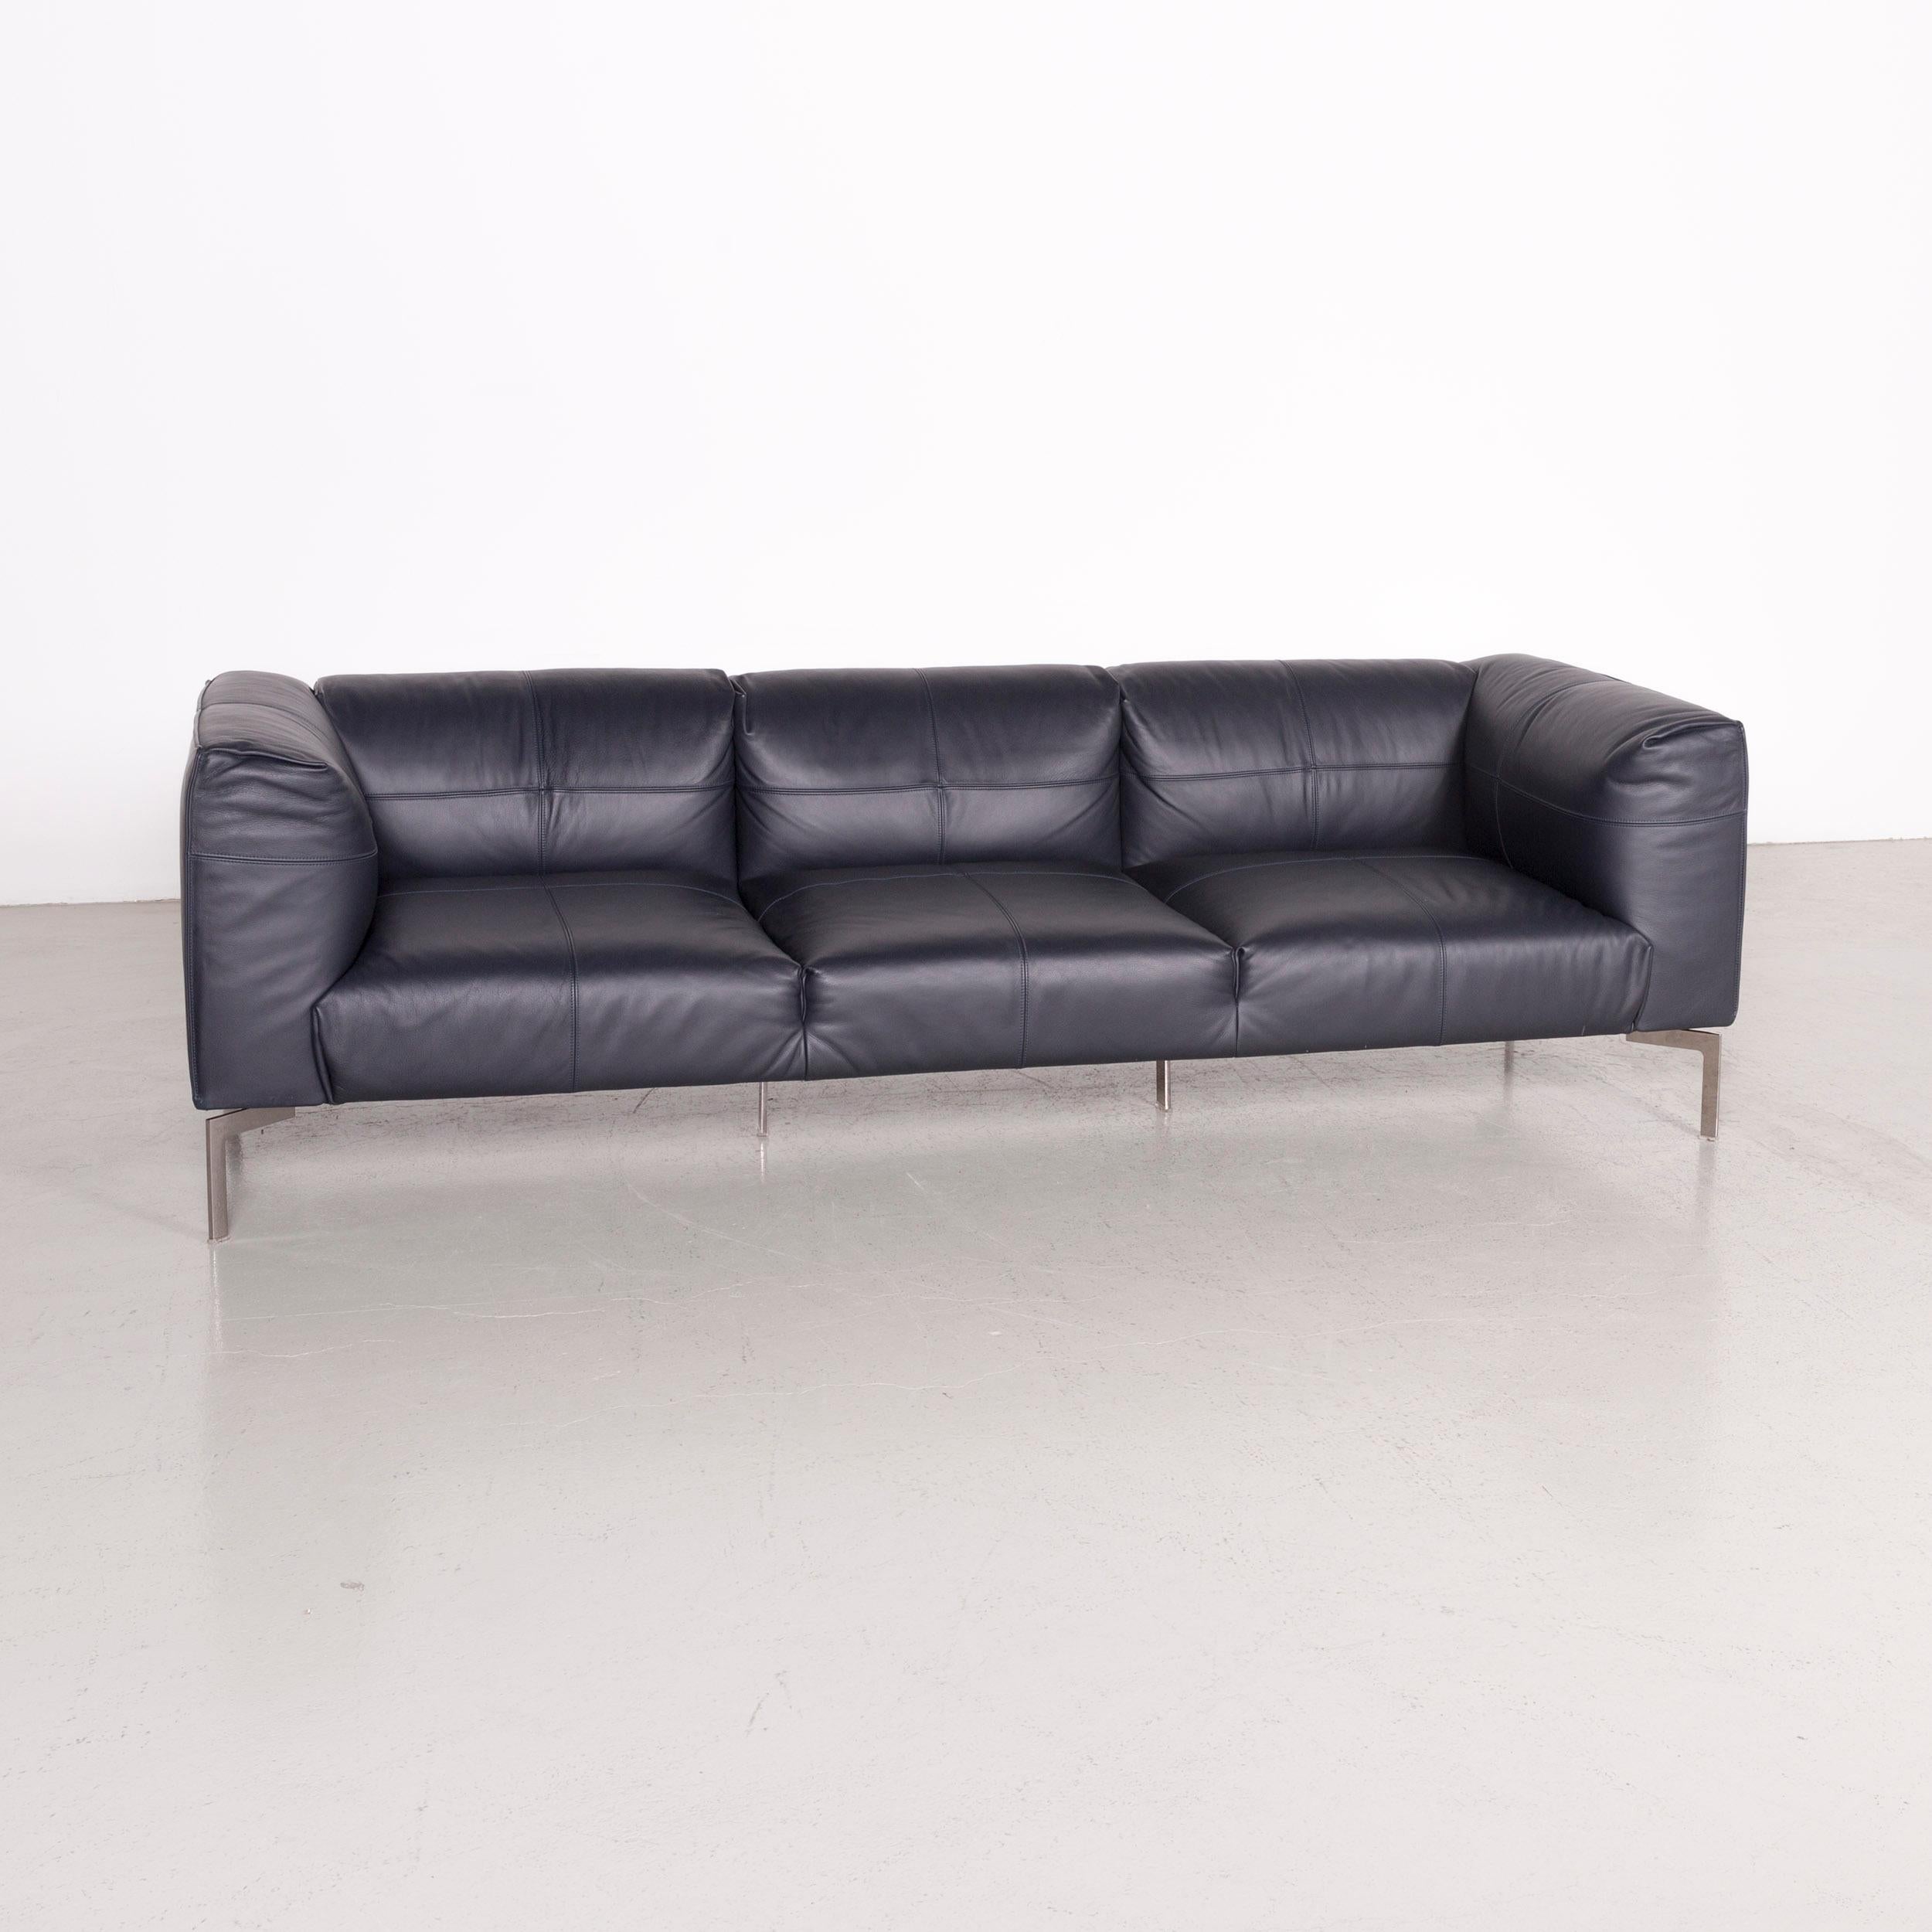 Poltrona Frau Bosforo designer leather couch blue three-seat sofa.